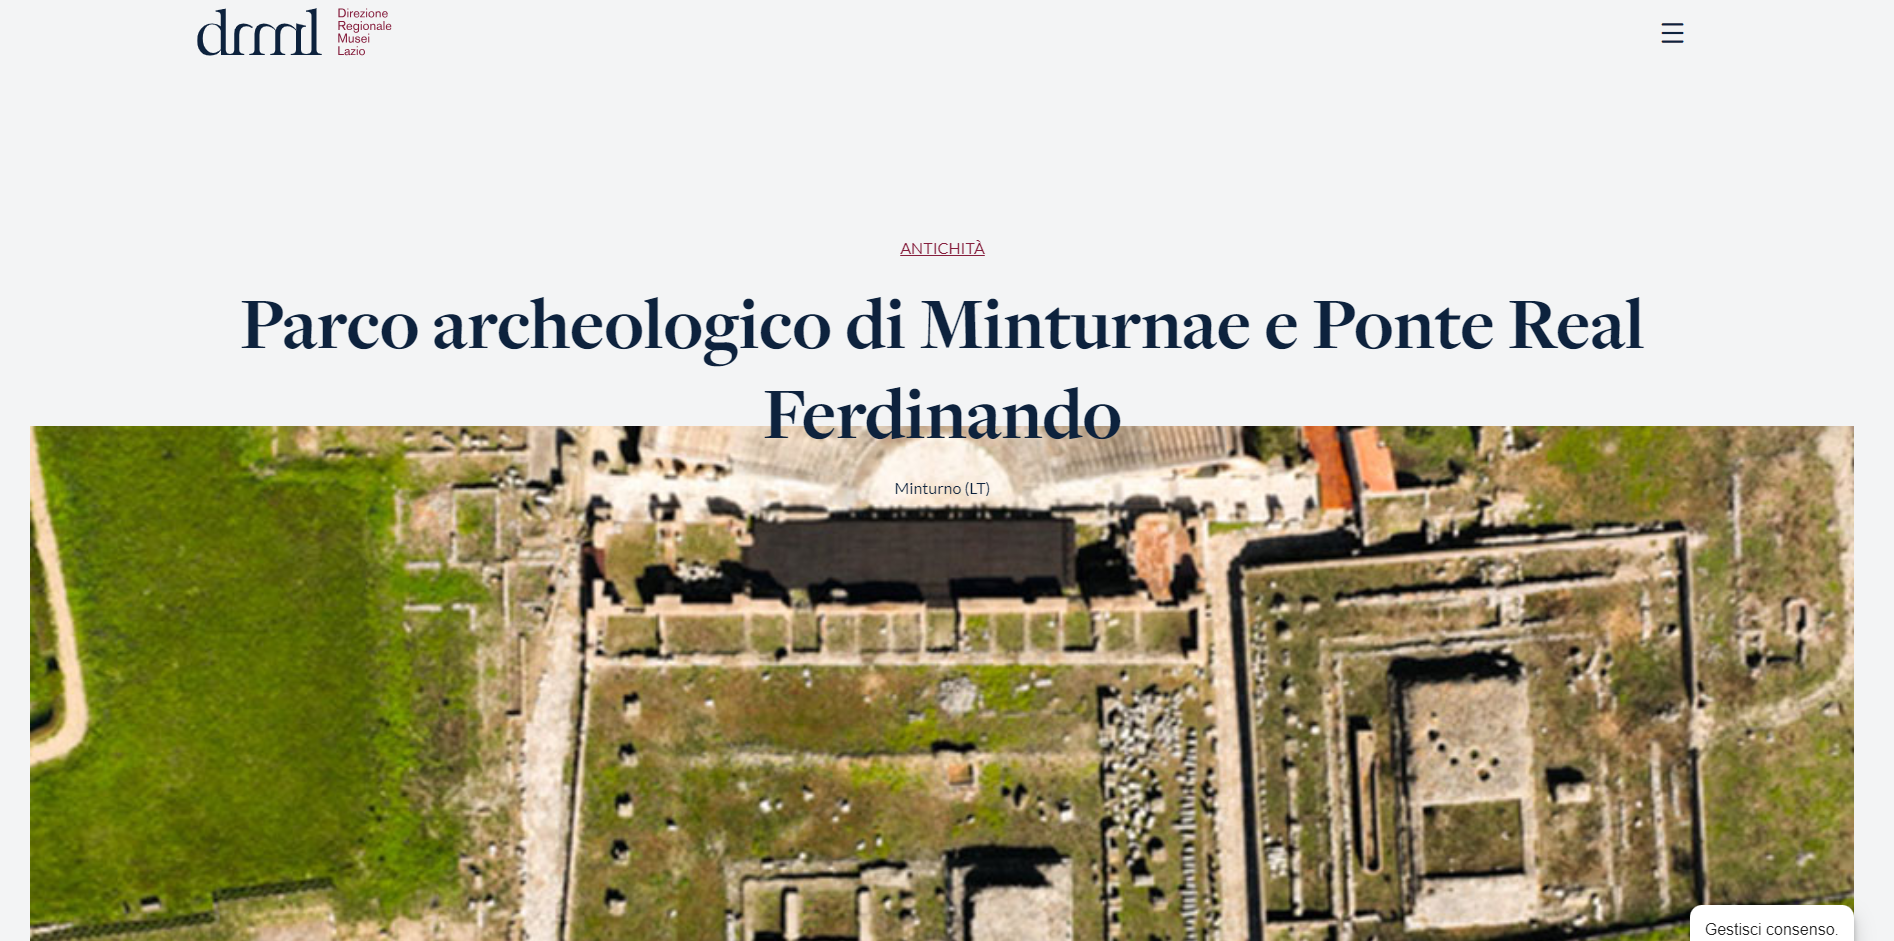 Parco archeologico di Minturnae e Ponte Real Ferdinando